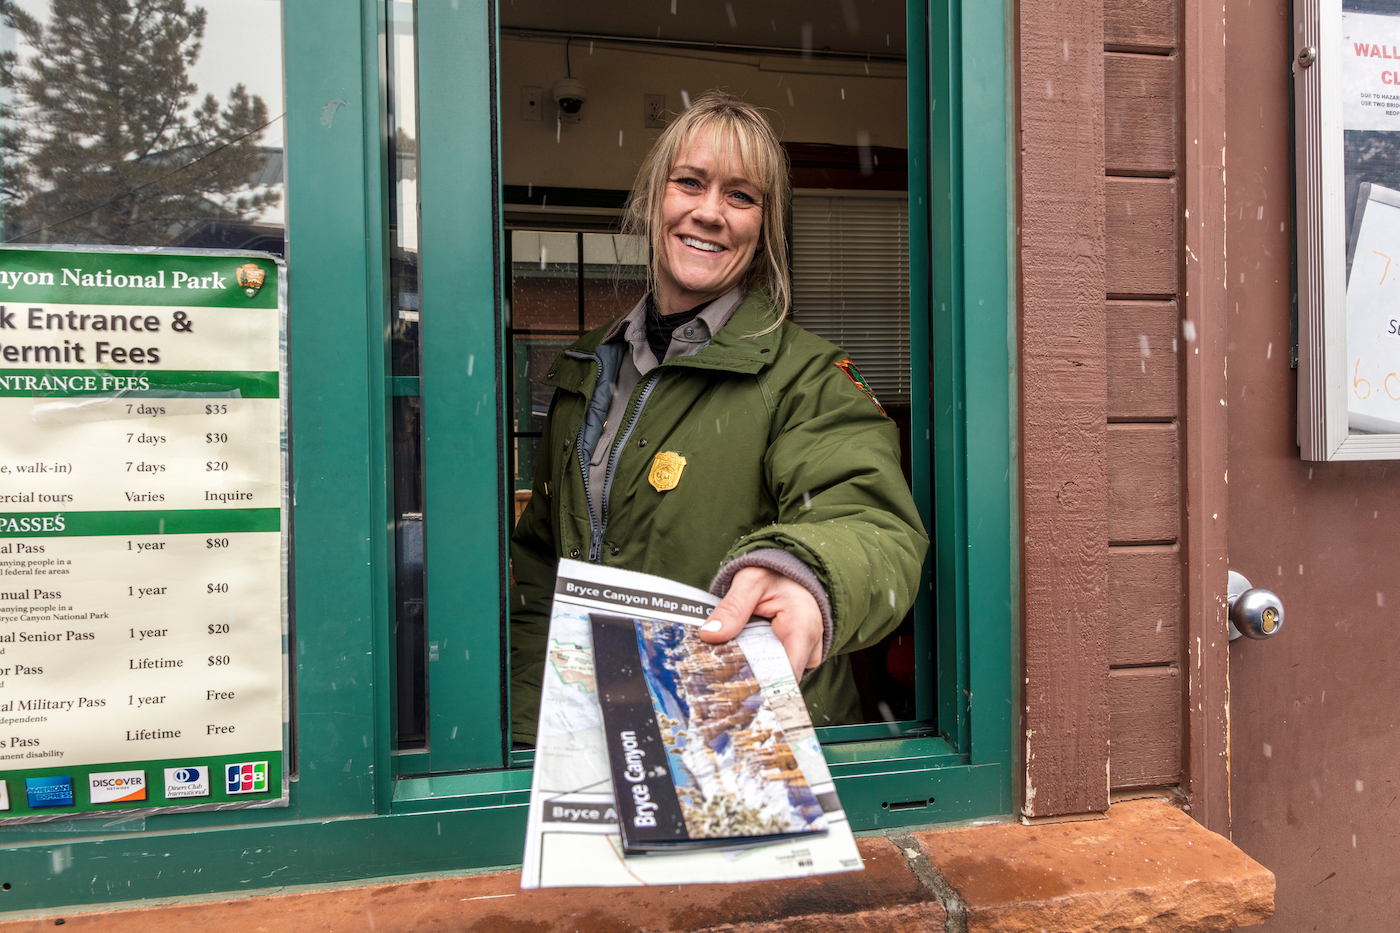 Female blond National Park Ranger hands out brochure through window at Bryce National Park, Utah